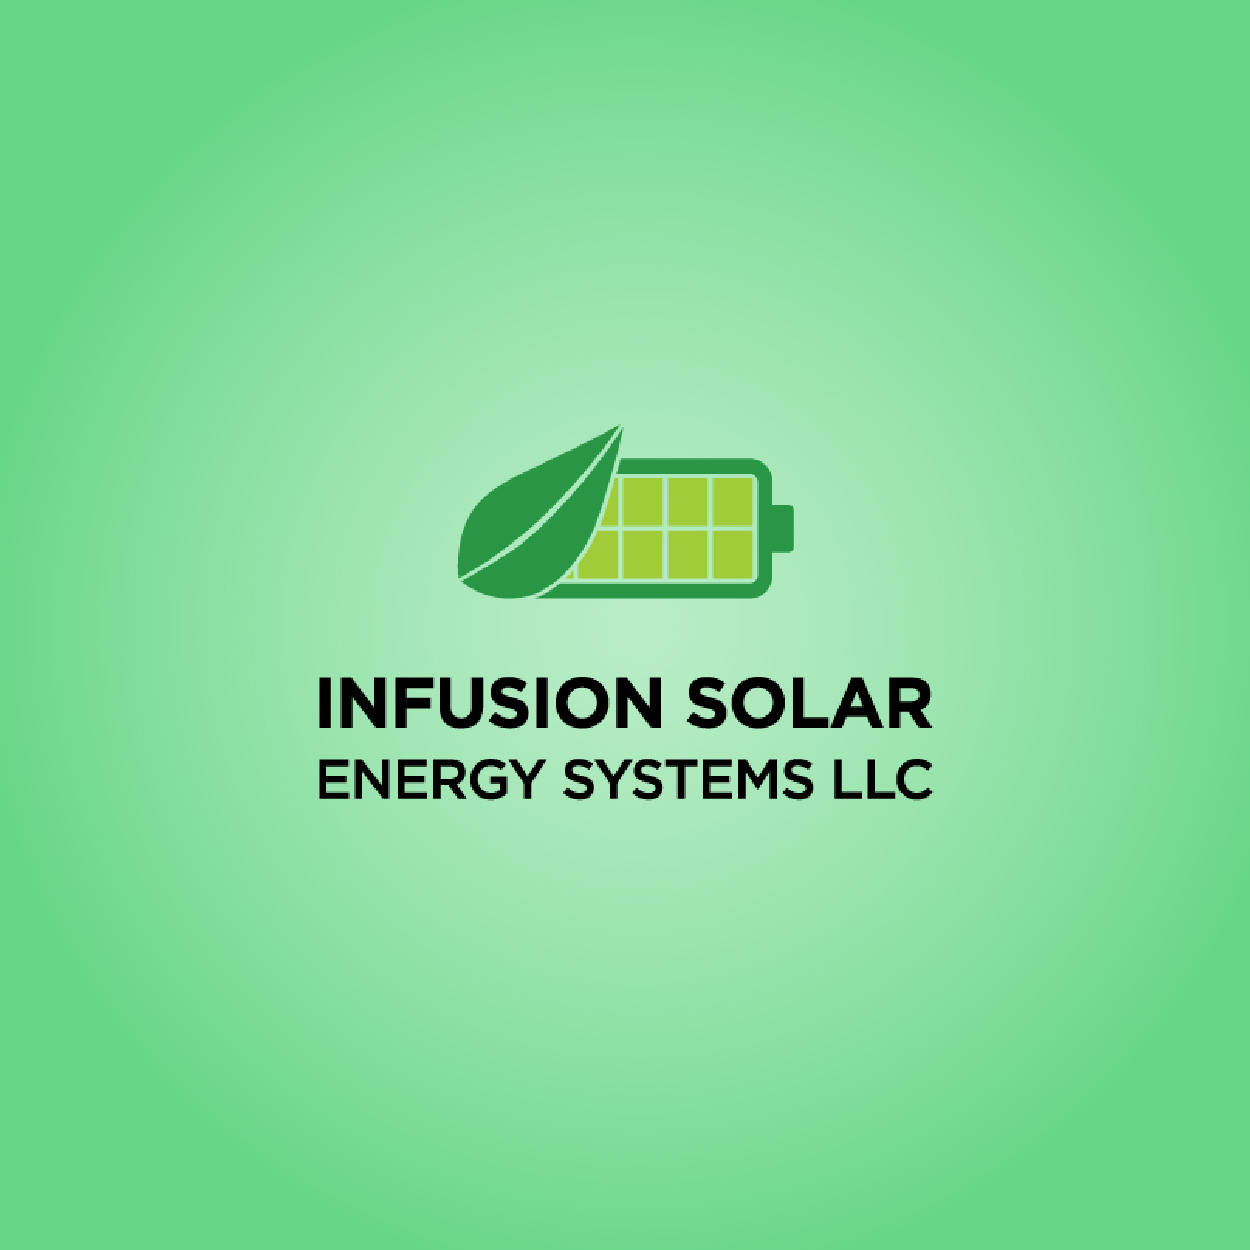 Infusion Solar Energy Systems LLC